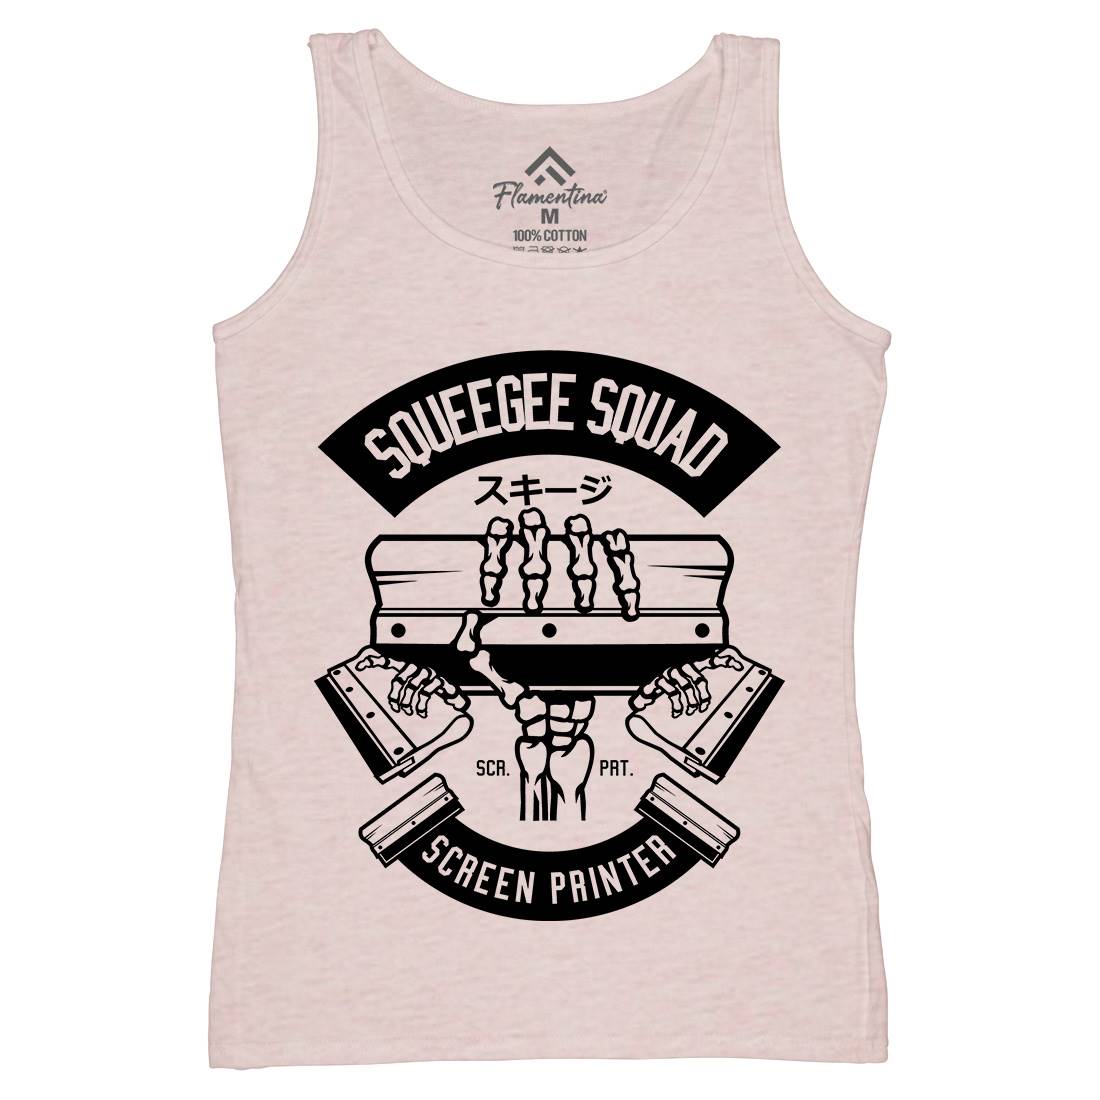 Squeegee Squad Womens Organic Tank Top Vest Retro B642